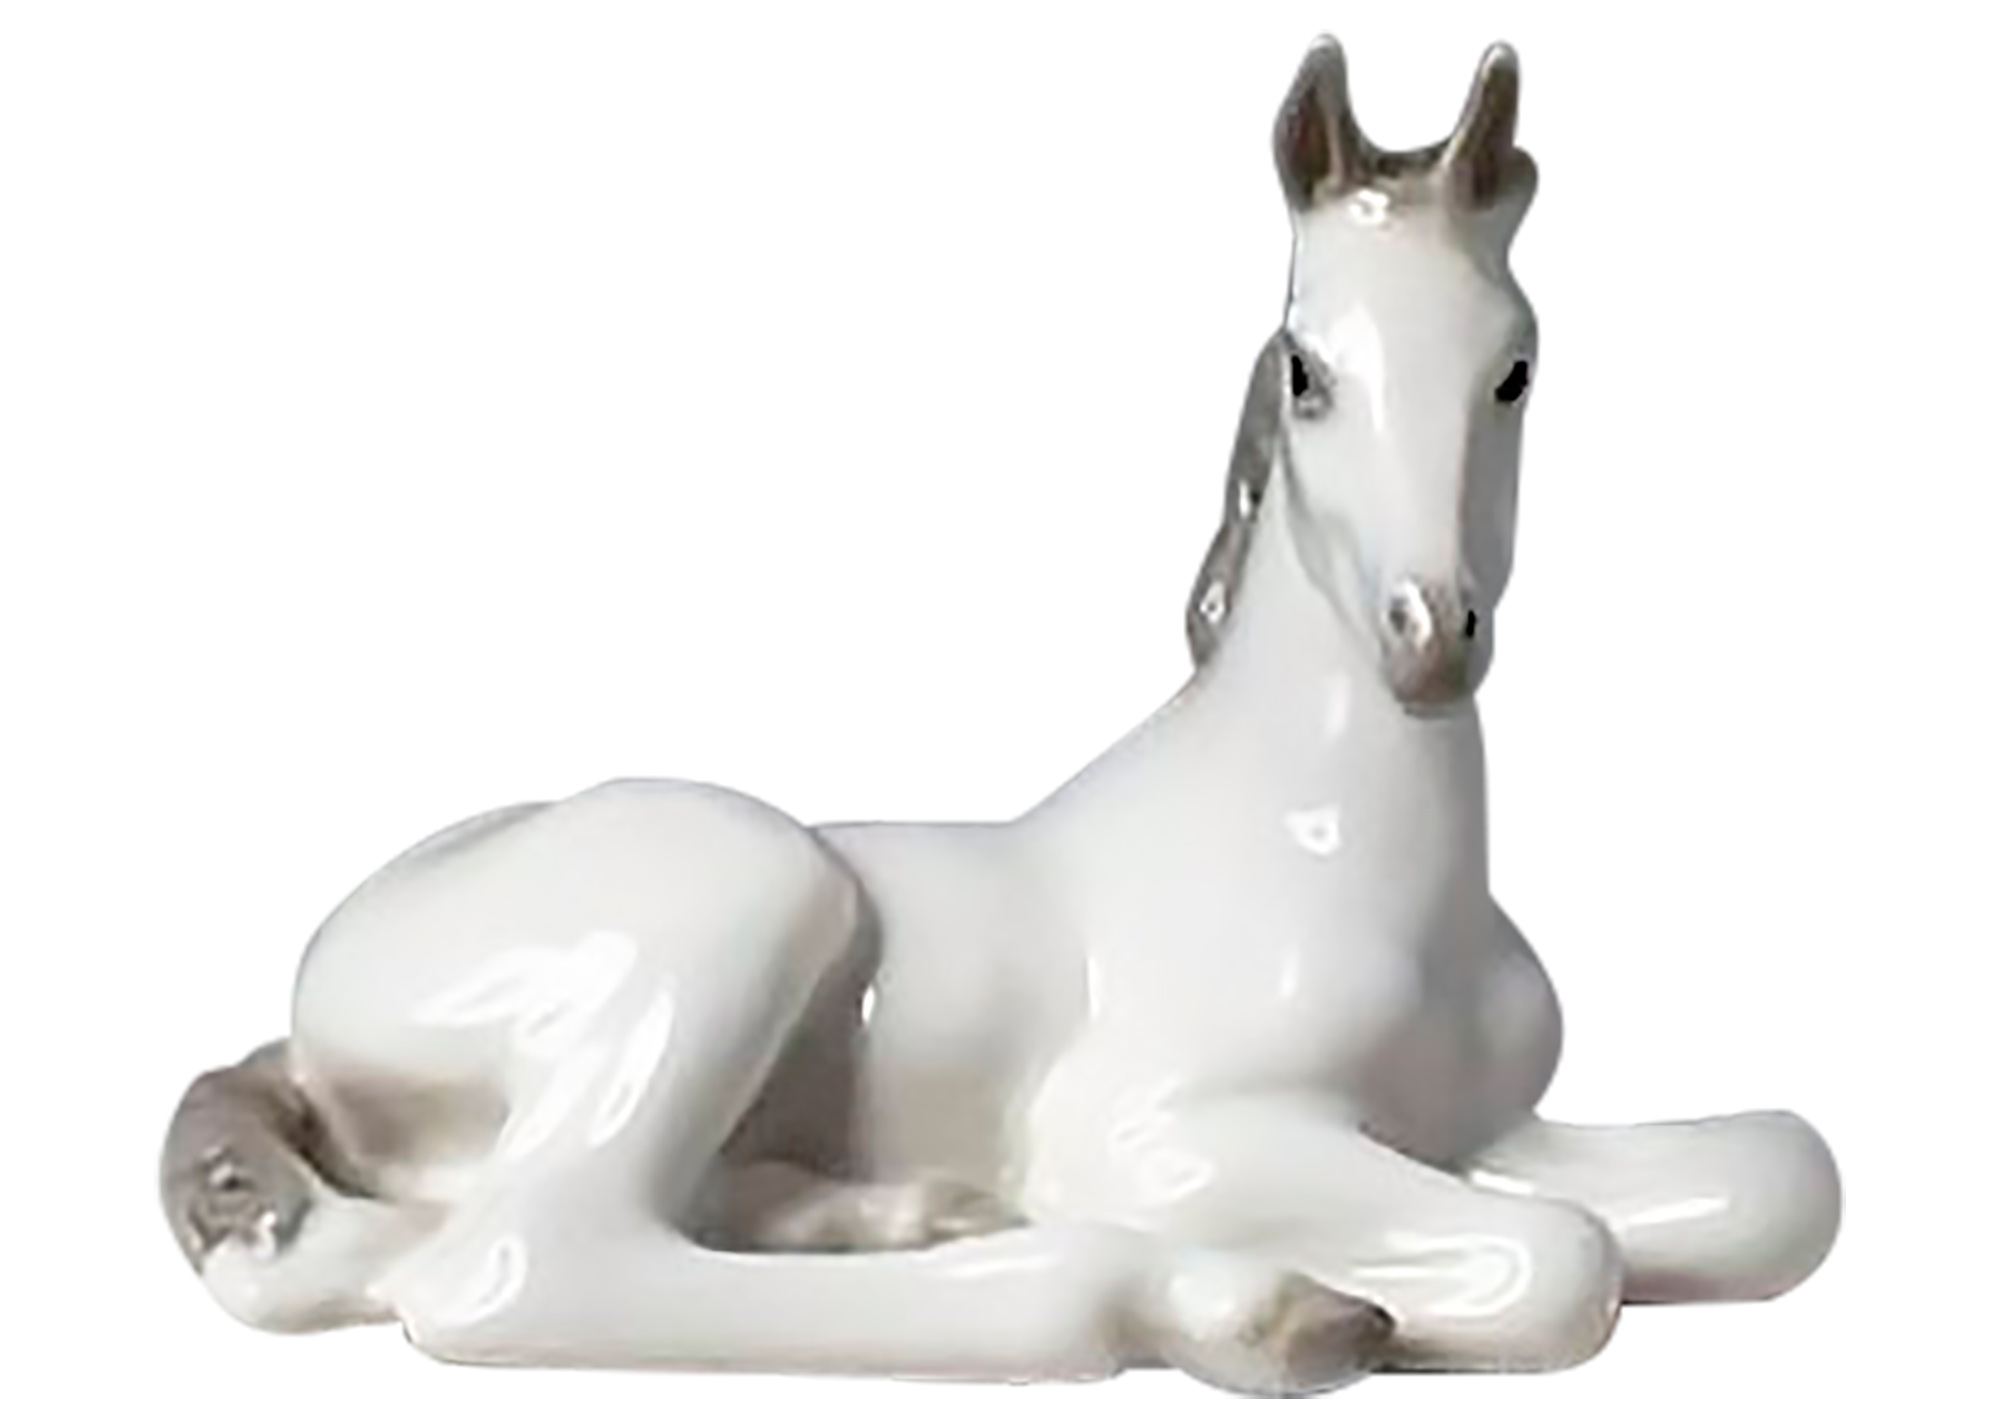 Buy Reposing White Foal Figurine at GoldenCockerel.com